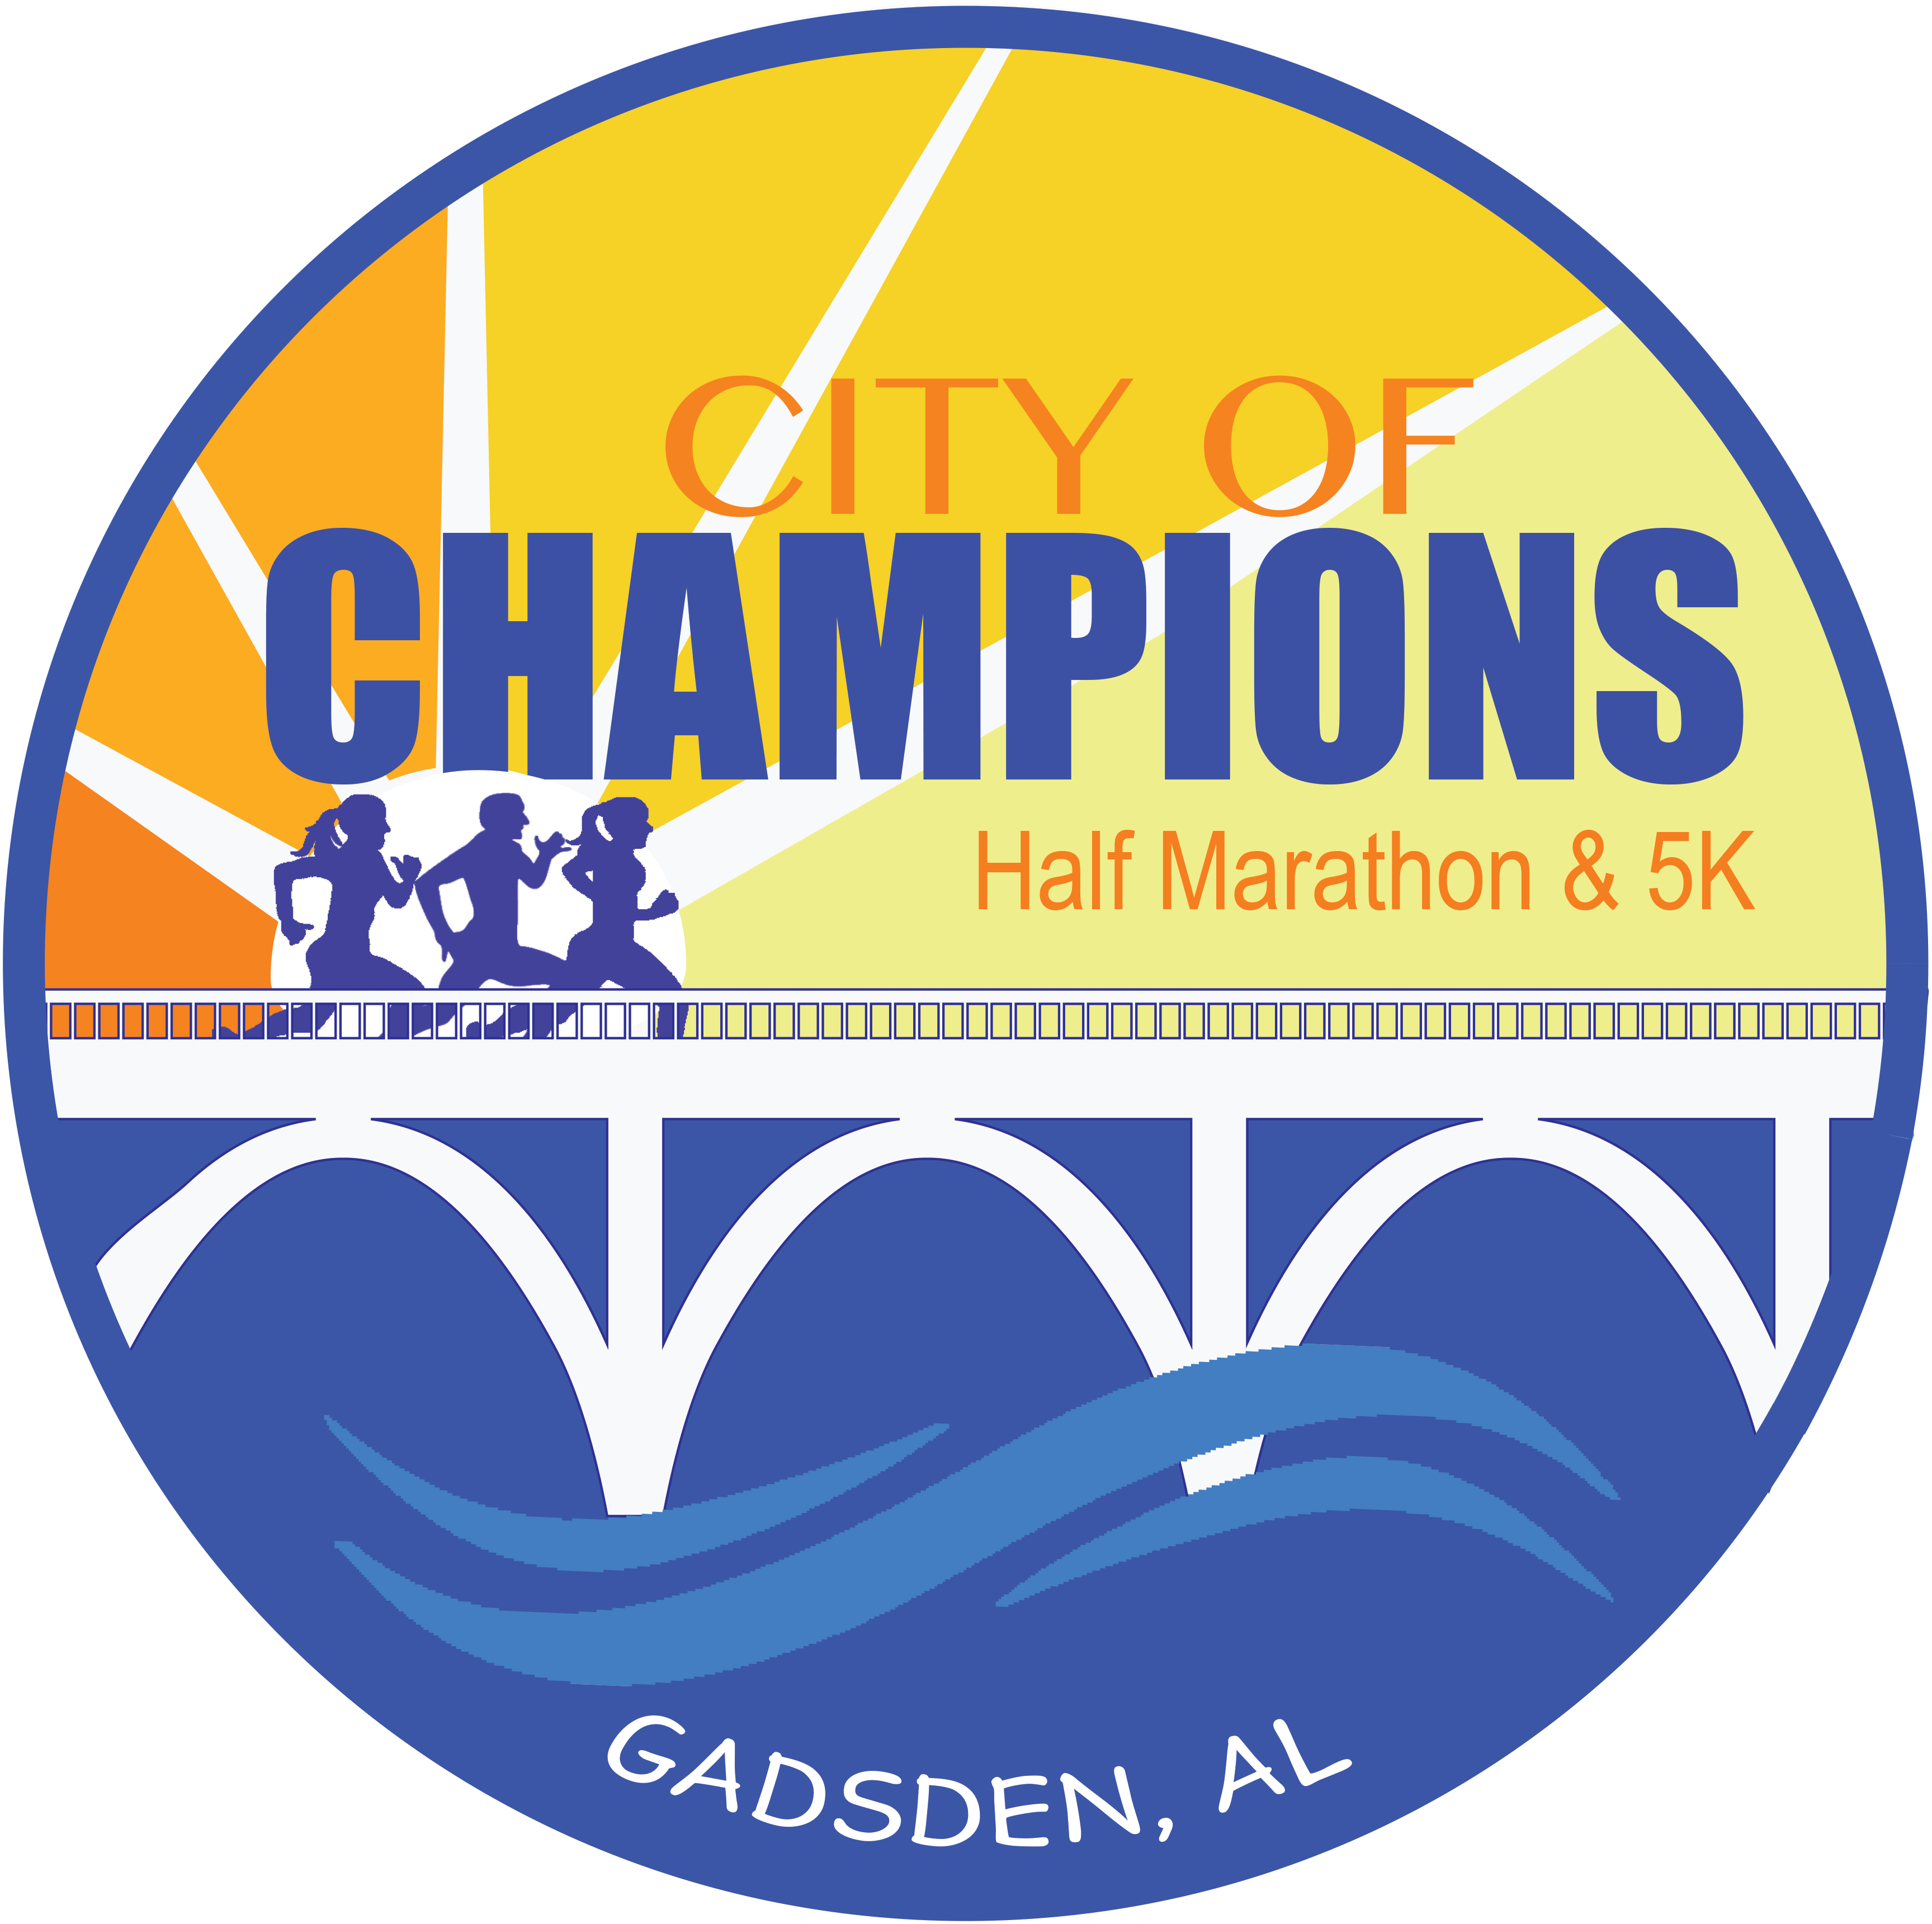 City of Champions Half Marathon Course Announced